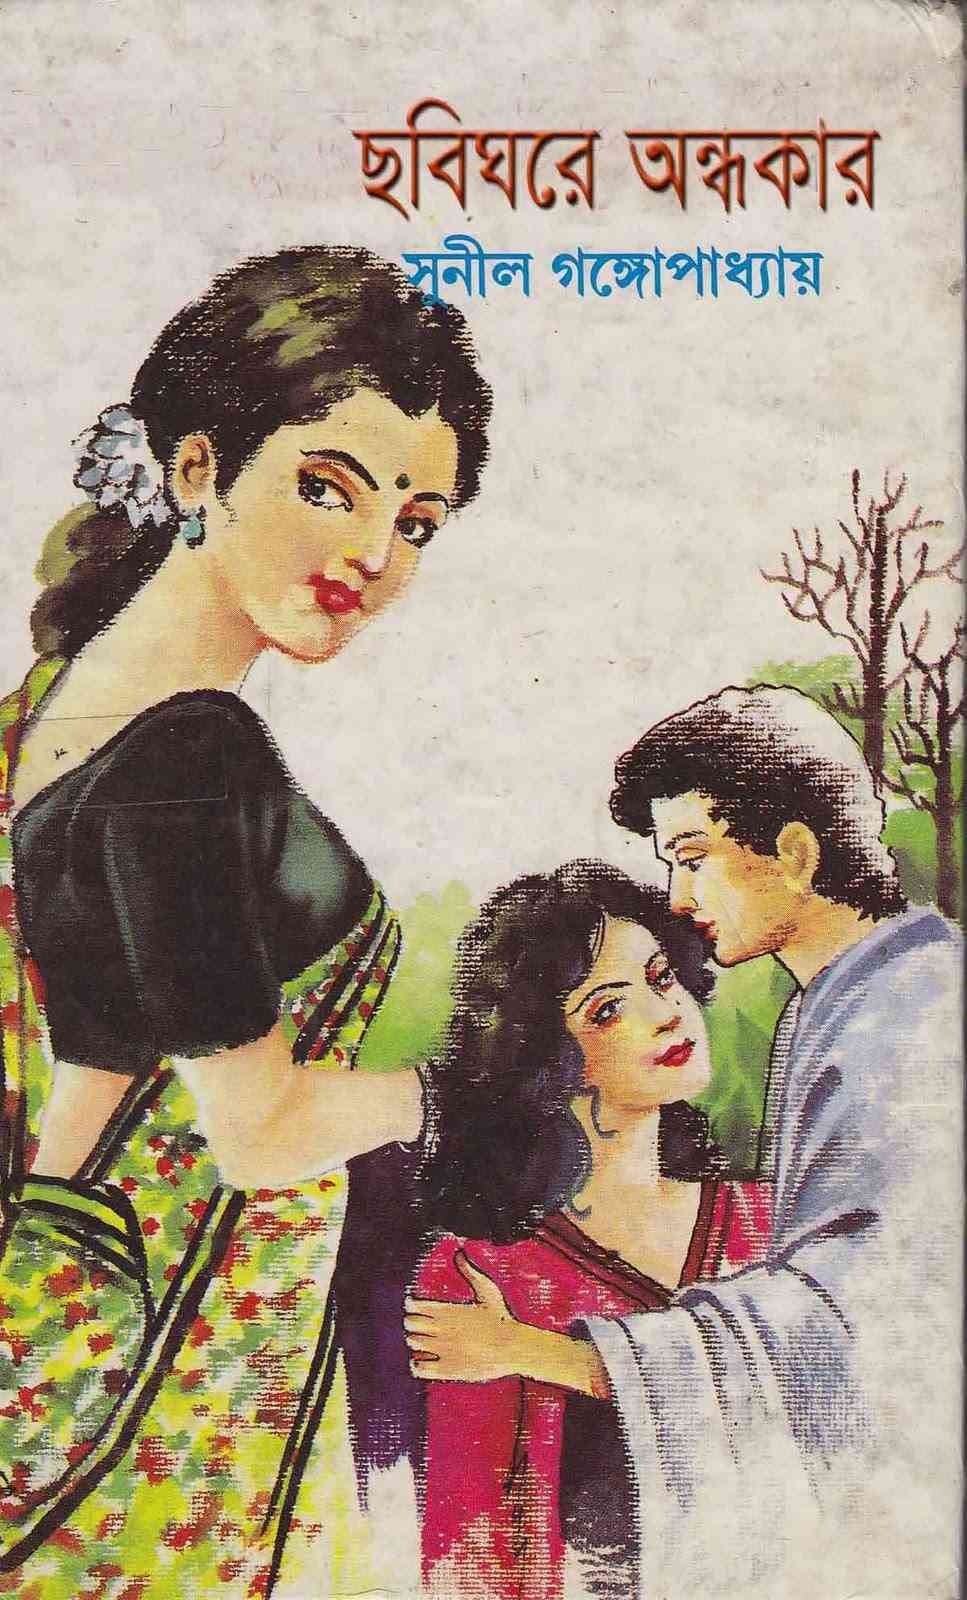 Chobighore Ondhokar : Sunil Gangapadhyay ( সুনীল গঙ্গোপাধ্যায় : ছবিঘরে অন্ধকার ) 15